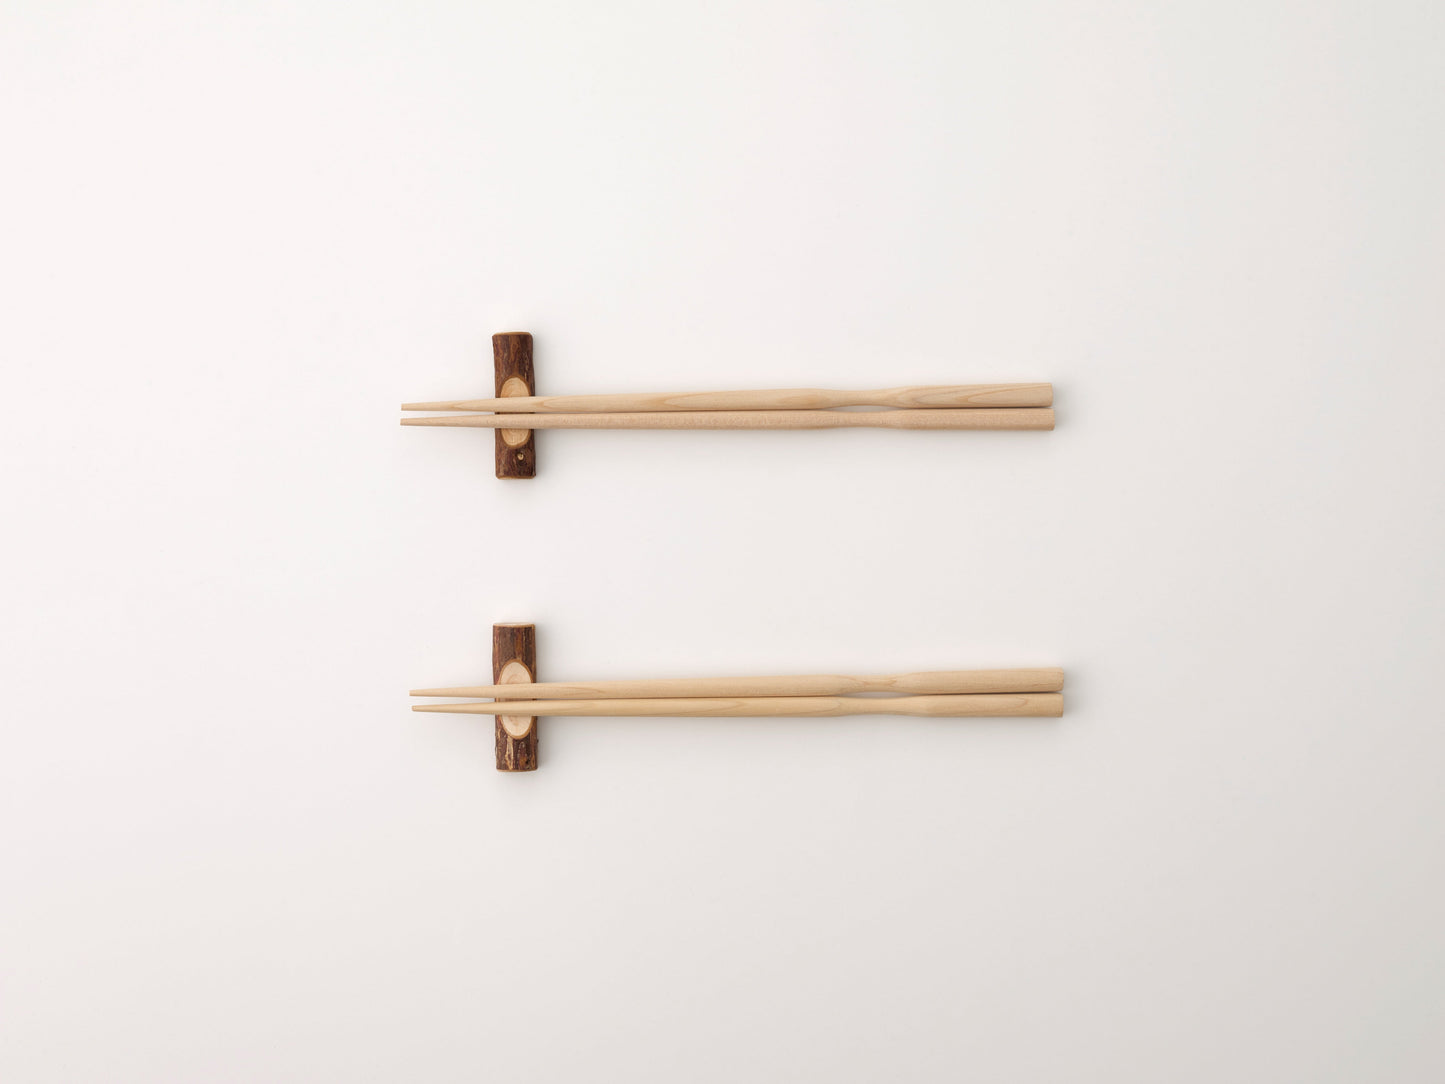 Cul de Sac hiba wood chopsticks on hiba wood chopstick rests